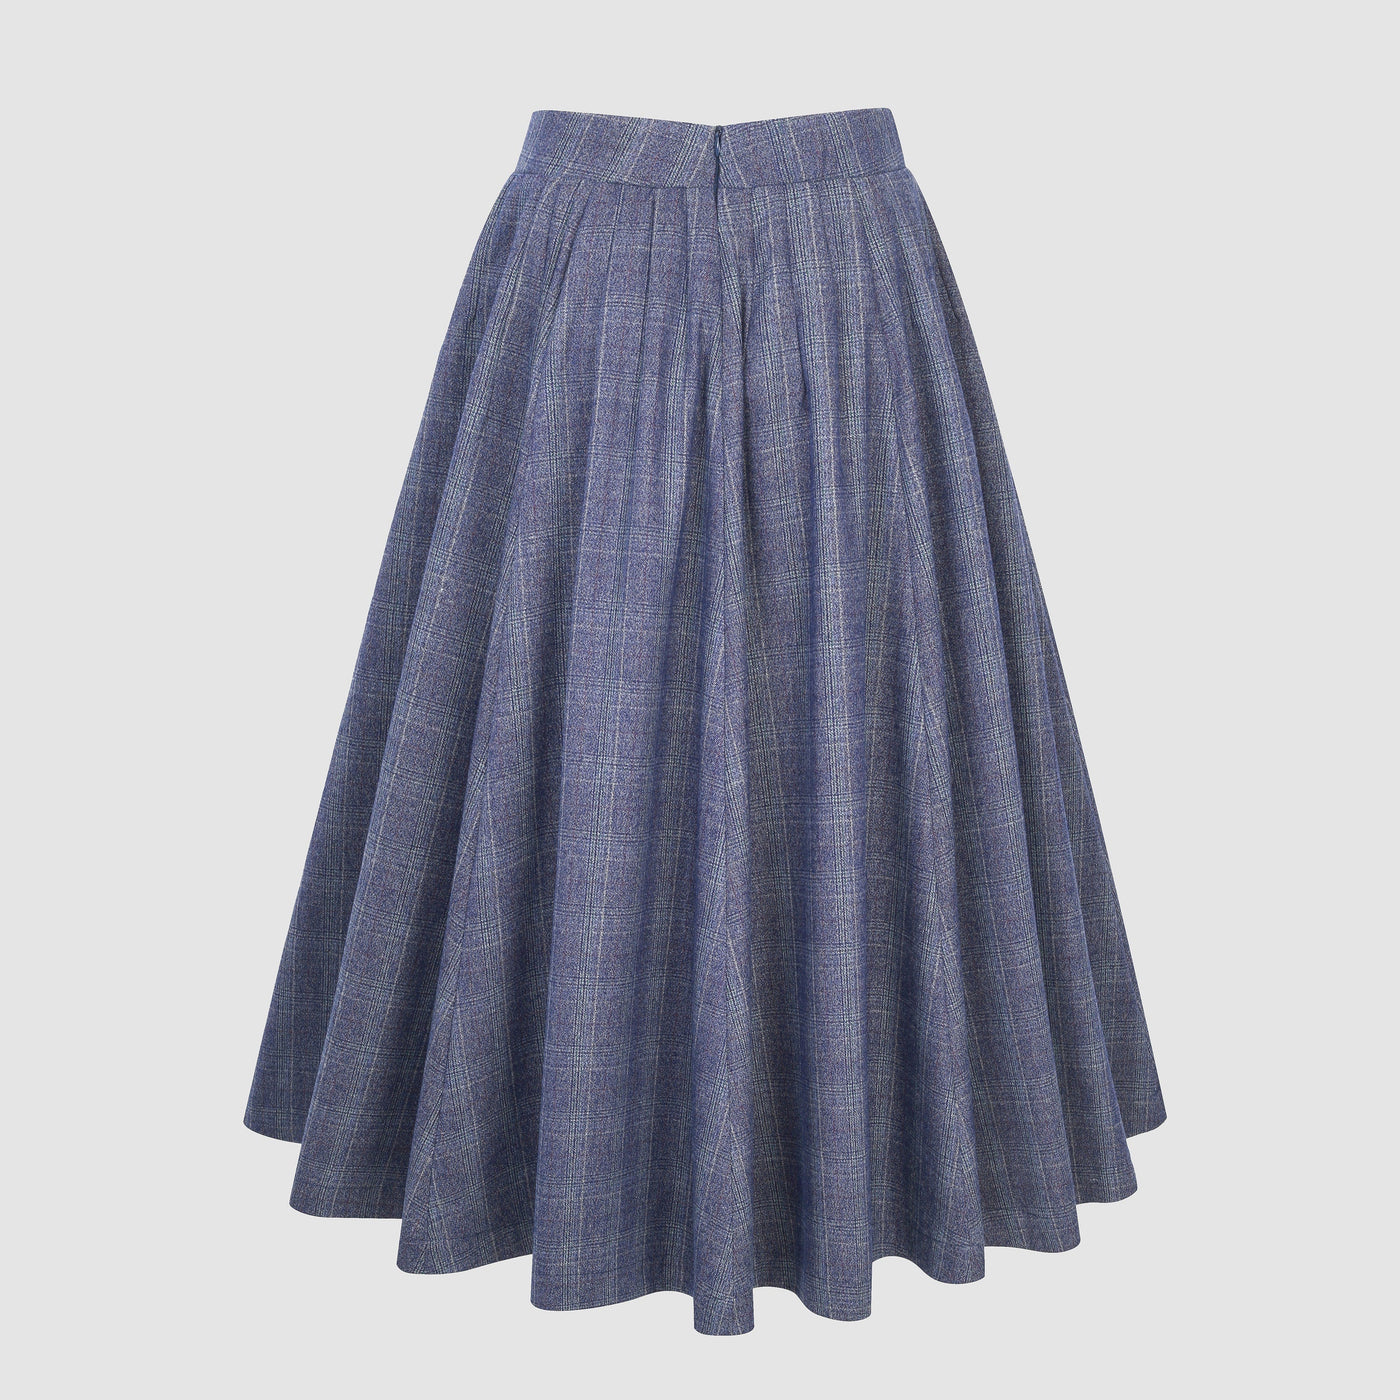 Future 4 | Tartan Wool Skirt in Blue – Linennaive